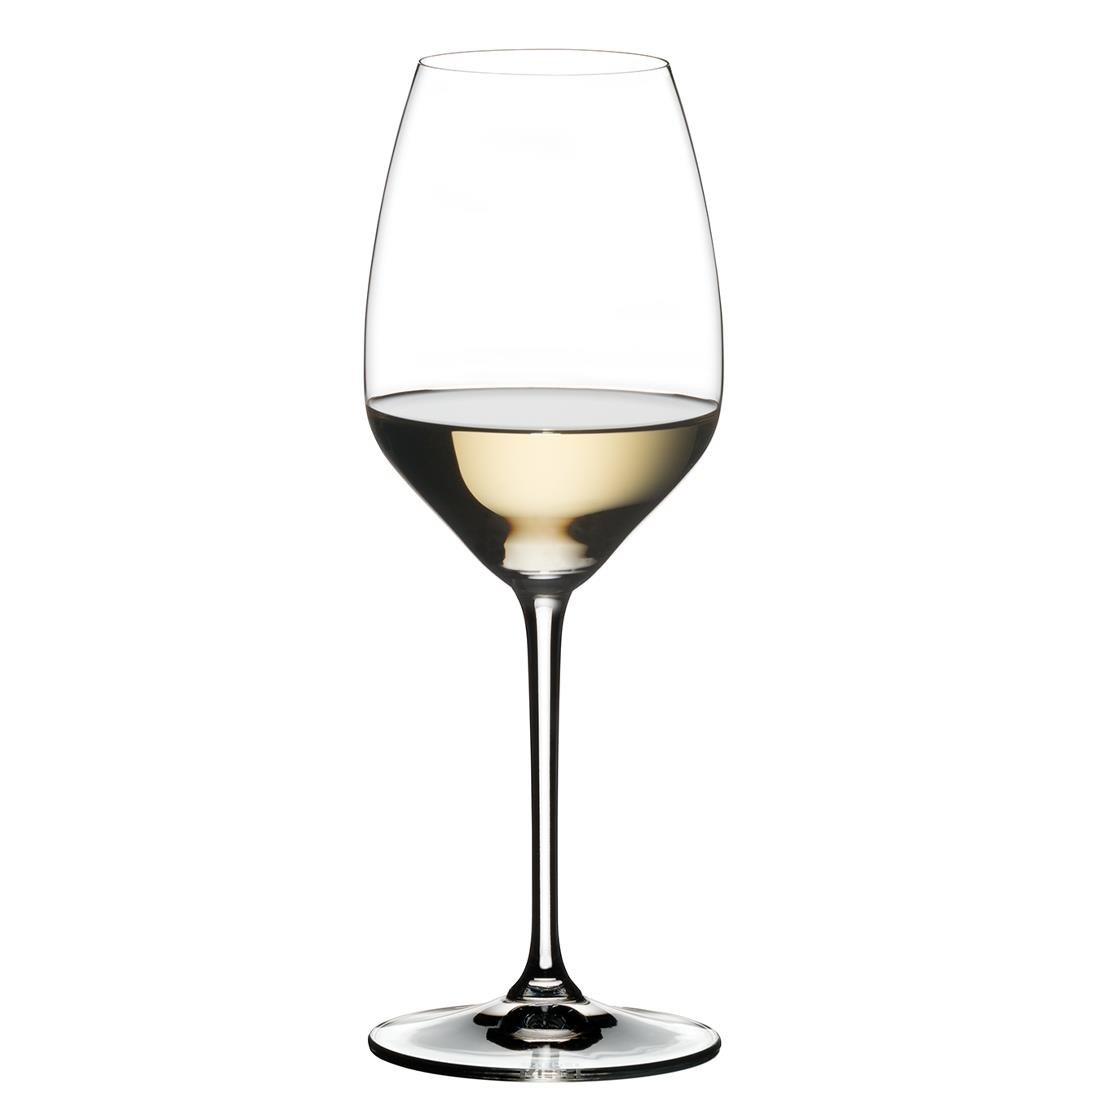 RIEDEL Extreme Riesling/Sauvignon Blanc Gläser 460ml (12 Stück)